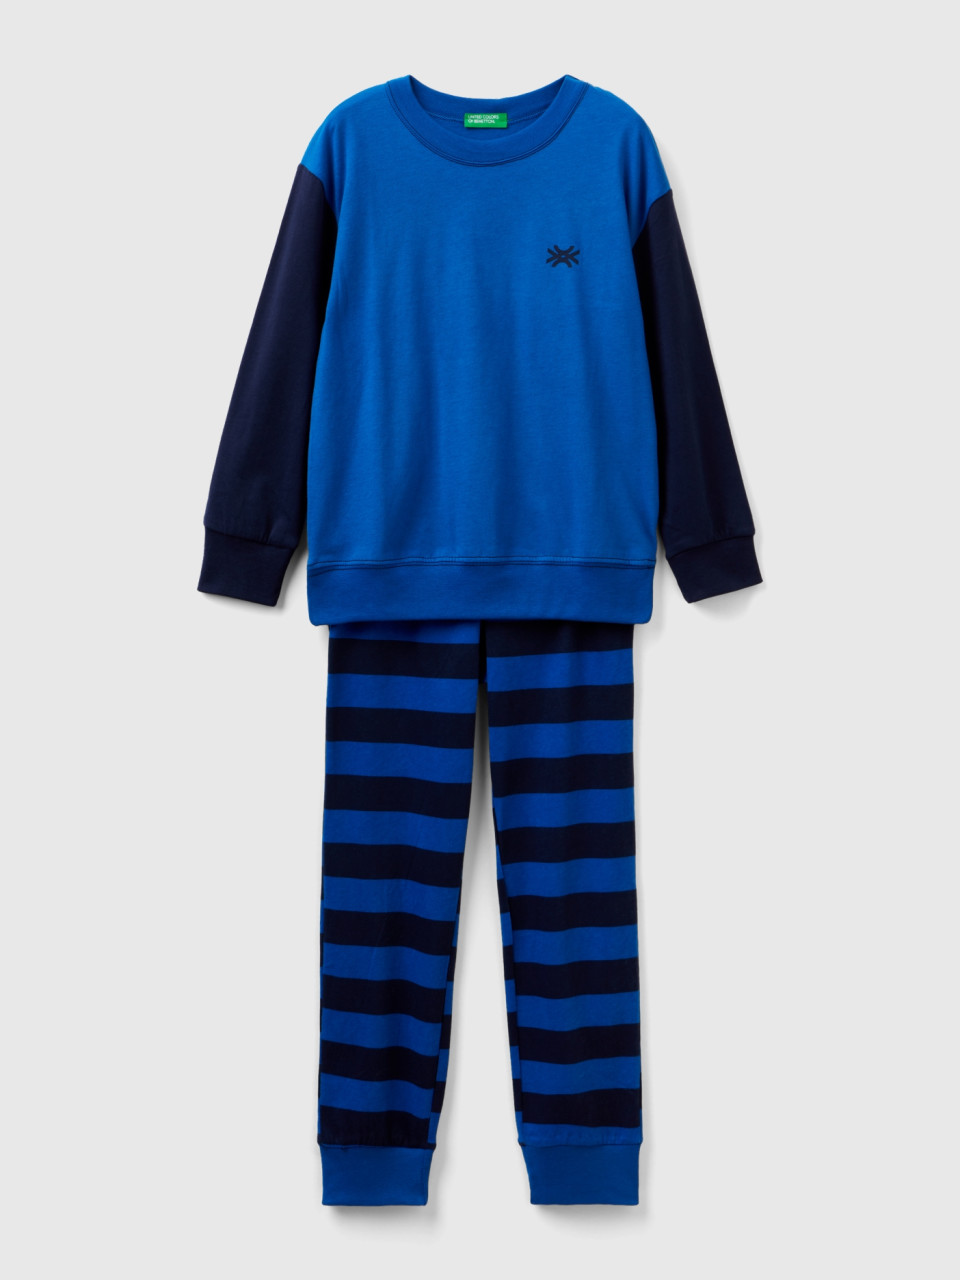 Benetton, Pyjamas With Striped Trousers, Multi-color, Kids